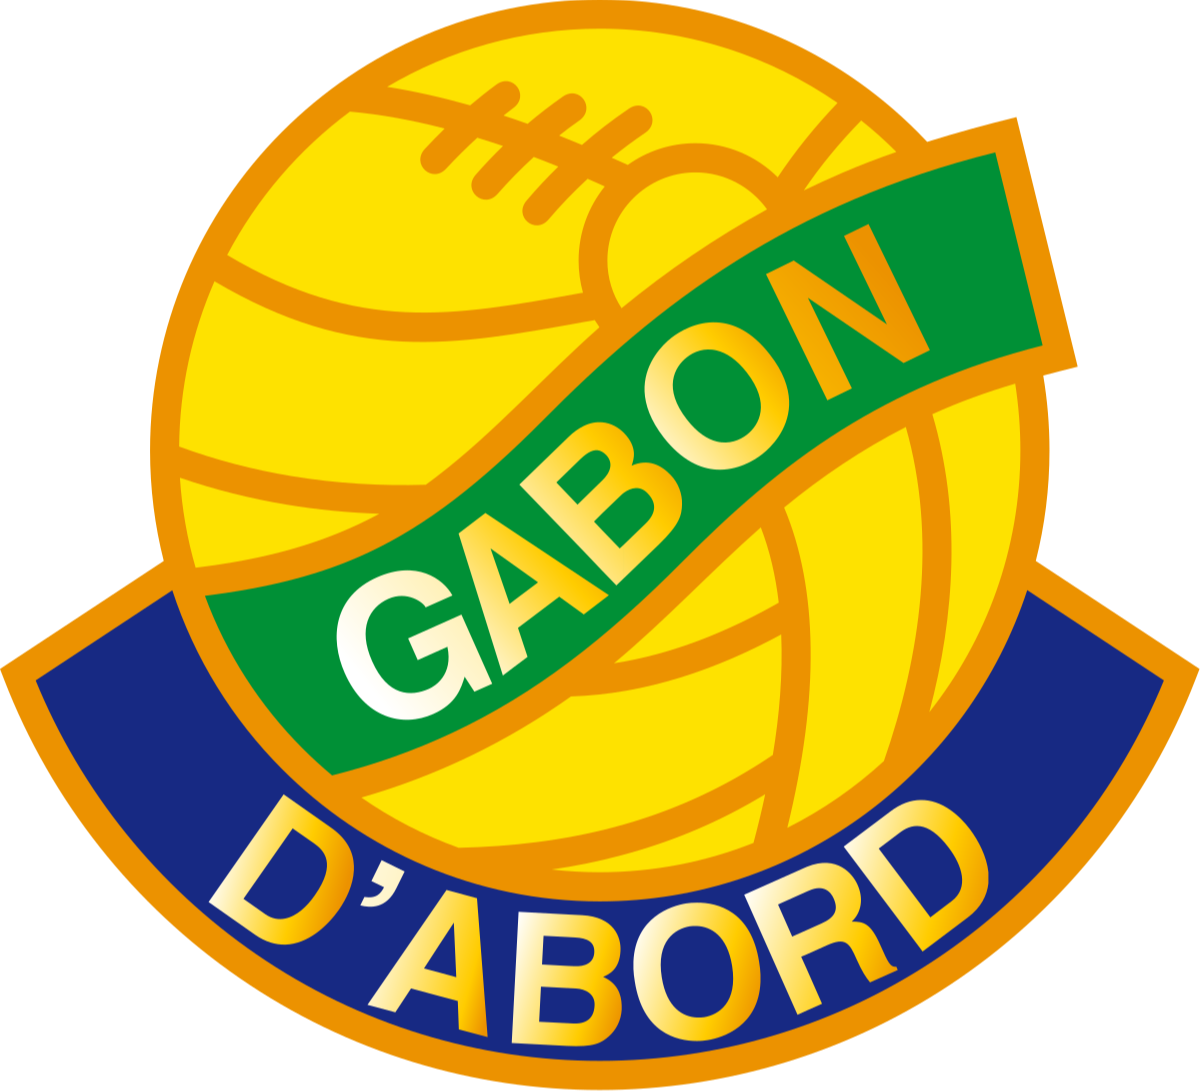 加蓬U20 logo